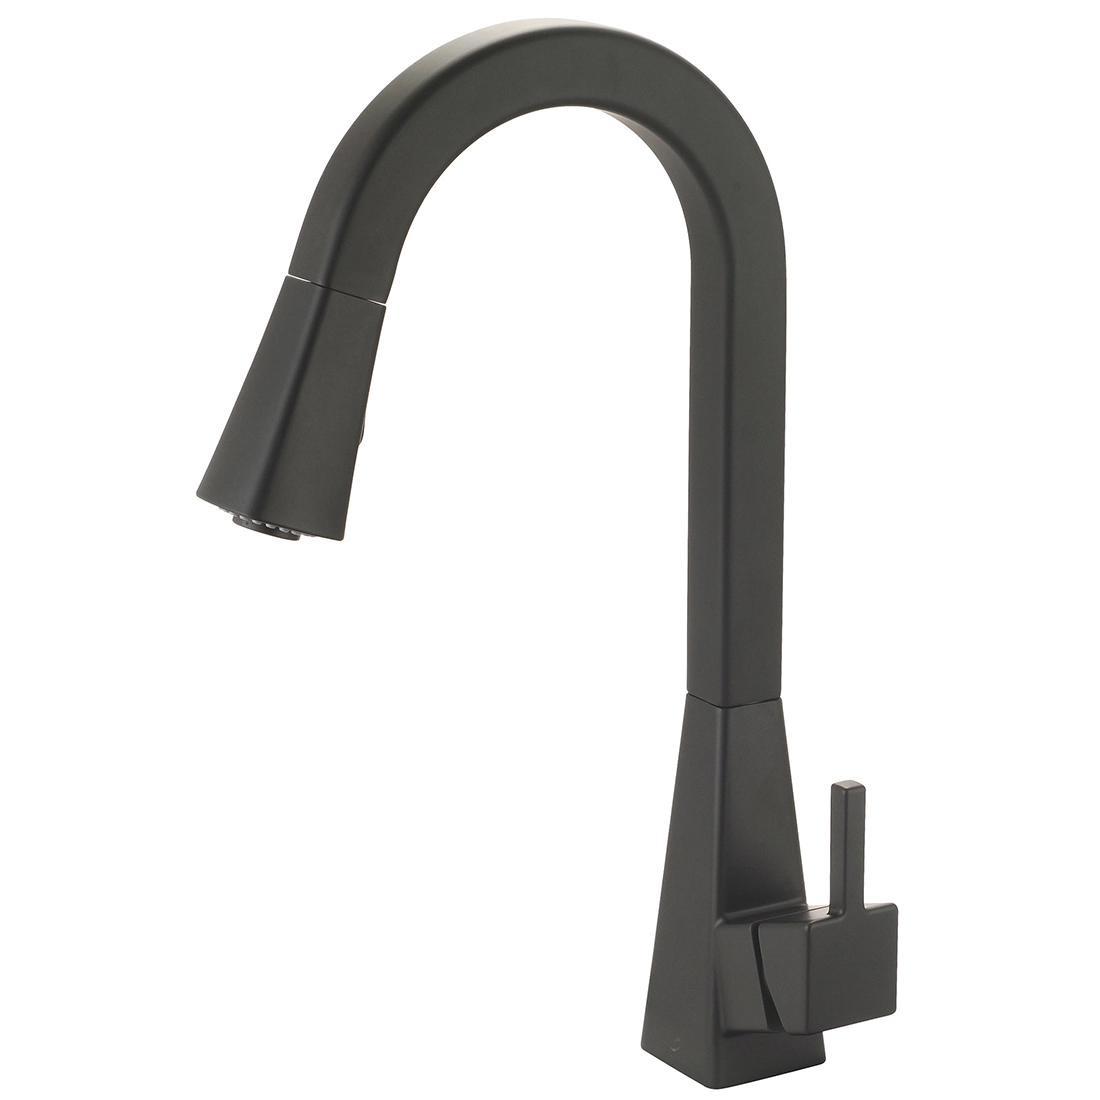 K-5060 Single Handle Pull Down Kitchen Faucet in Matte Black